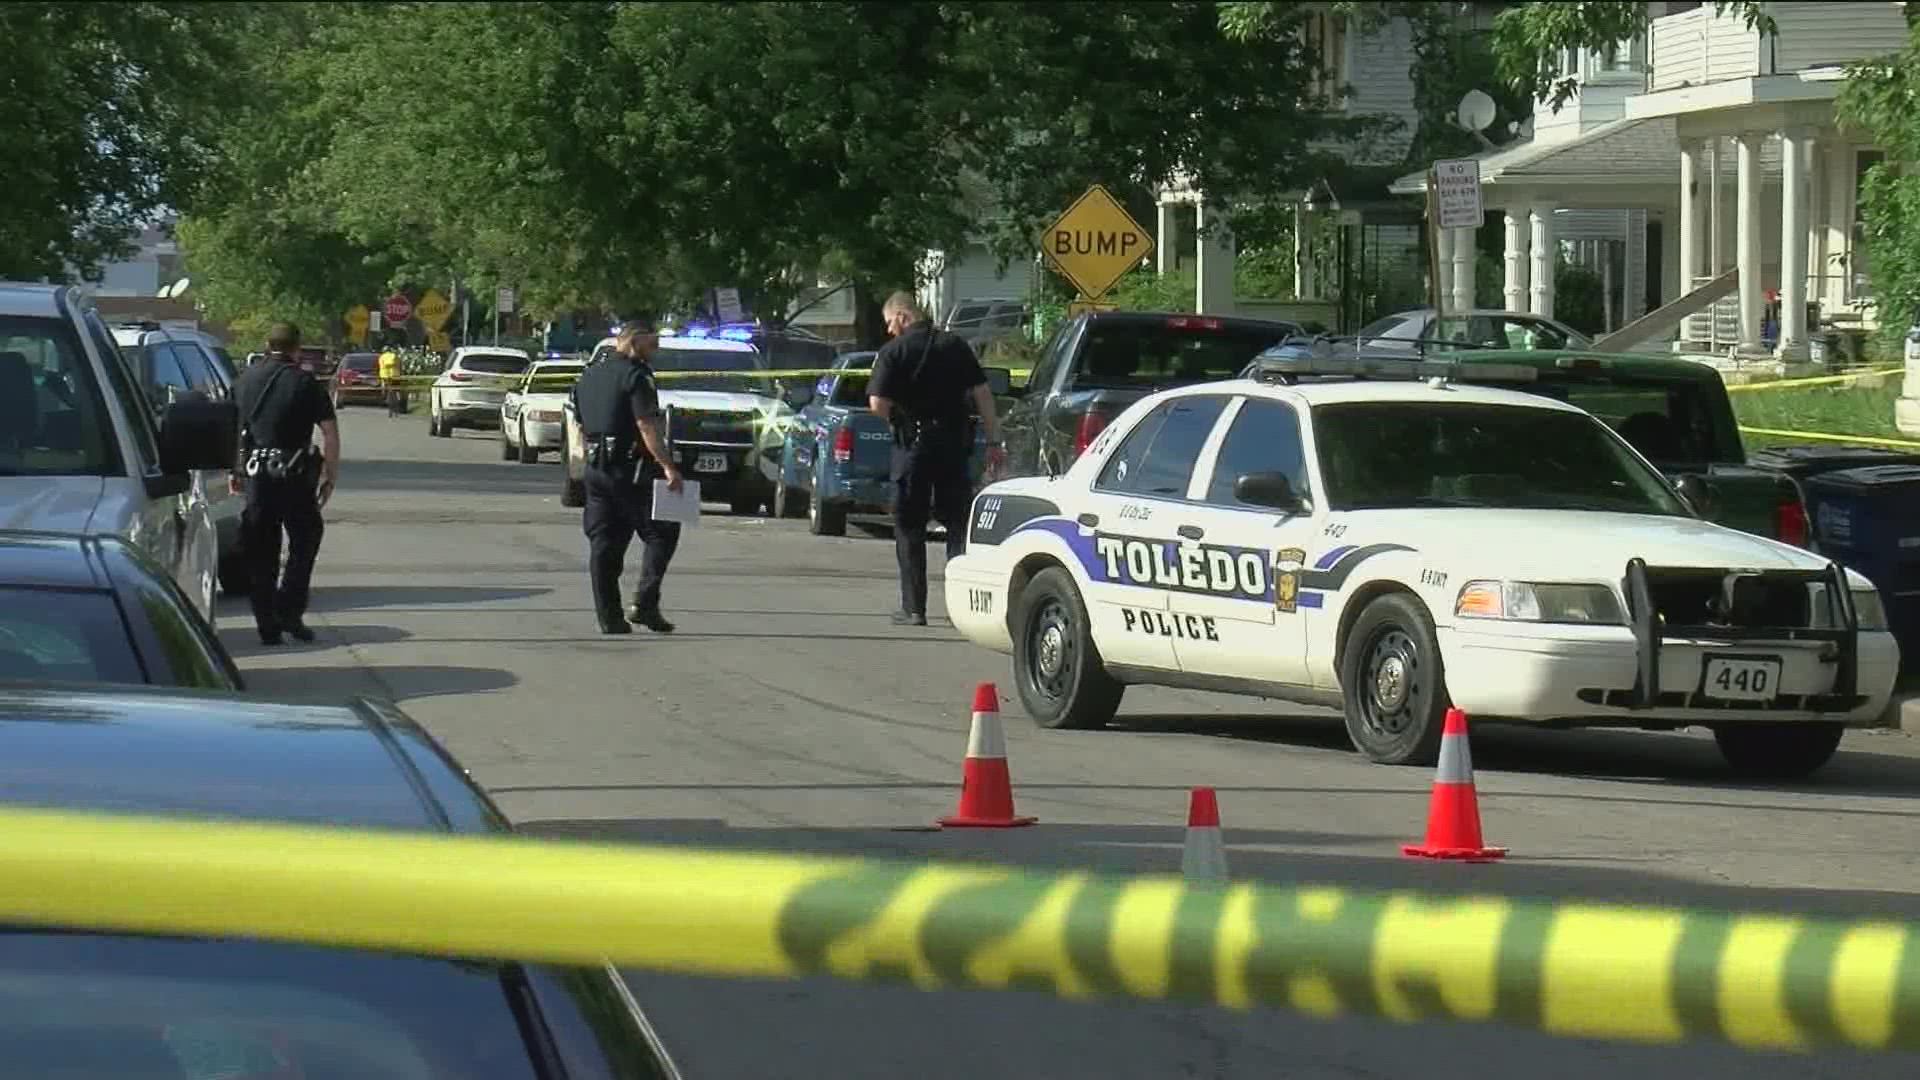 The shooting happened on Platt St. near Starr Ave. around 3:40 p.m. Charles Marshall, 38, was Toledo's second victim of homicide on Saturday.